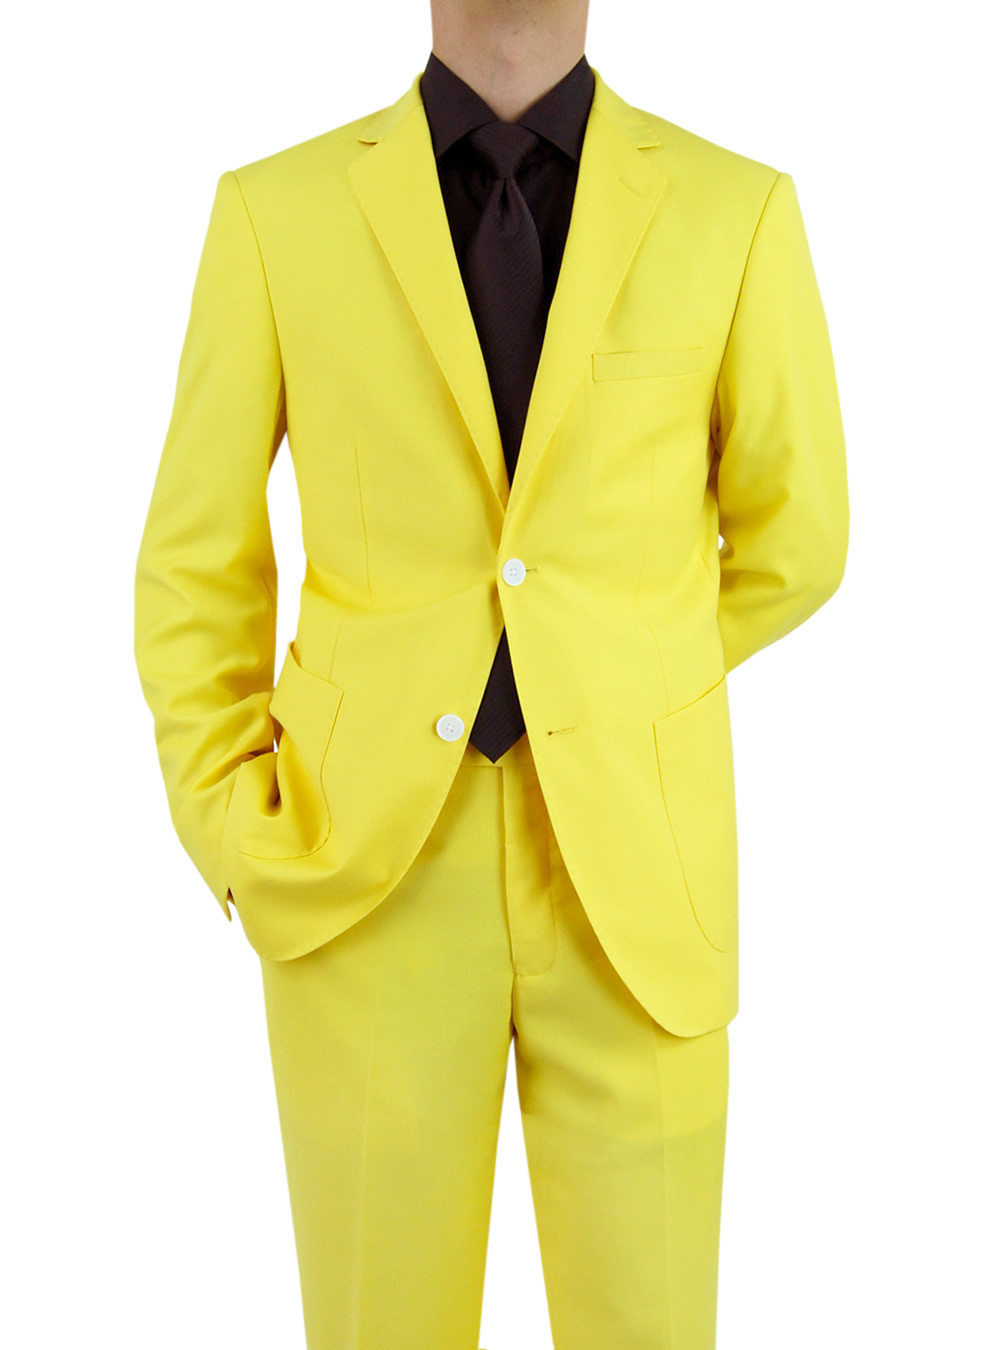 Mens Yellow 2 Button suit separates by Salvatore Exte - MENS SUITS